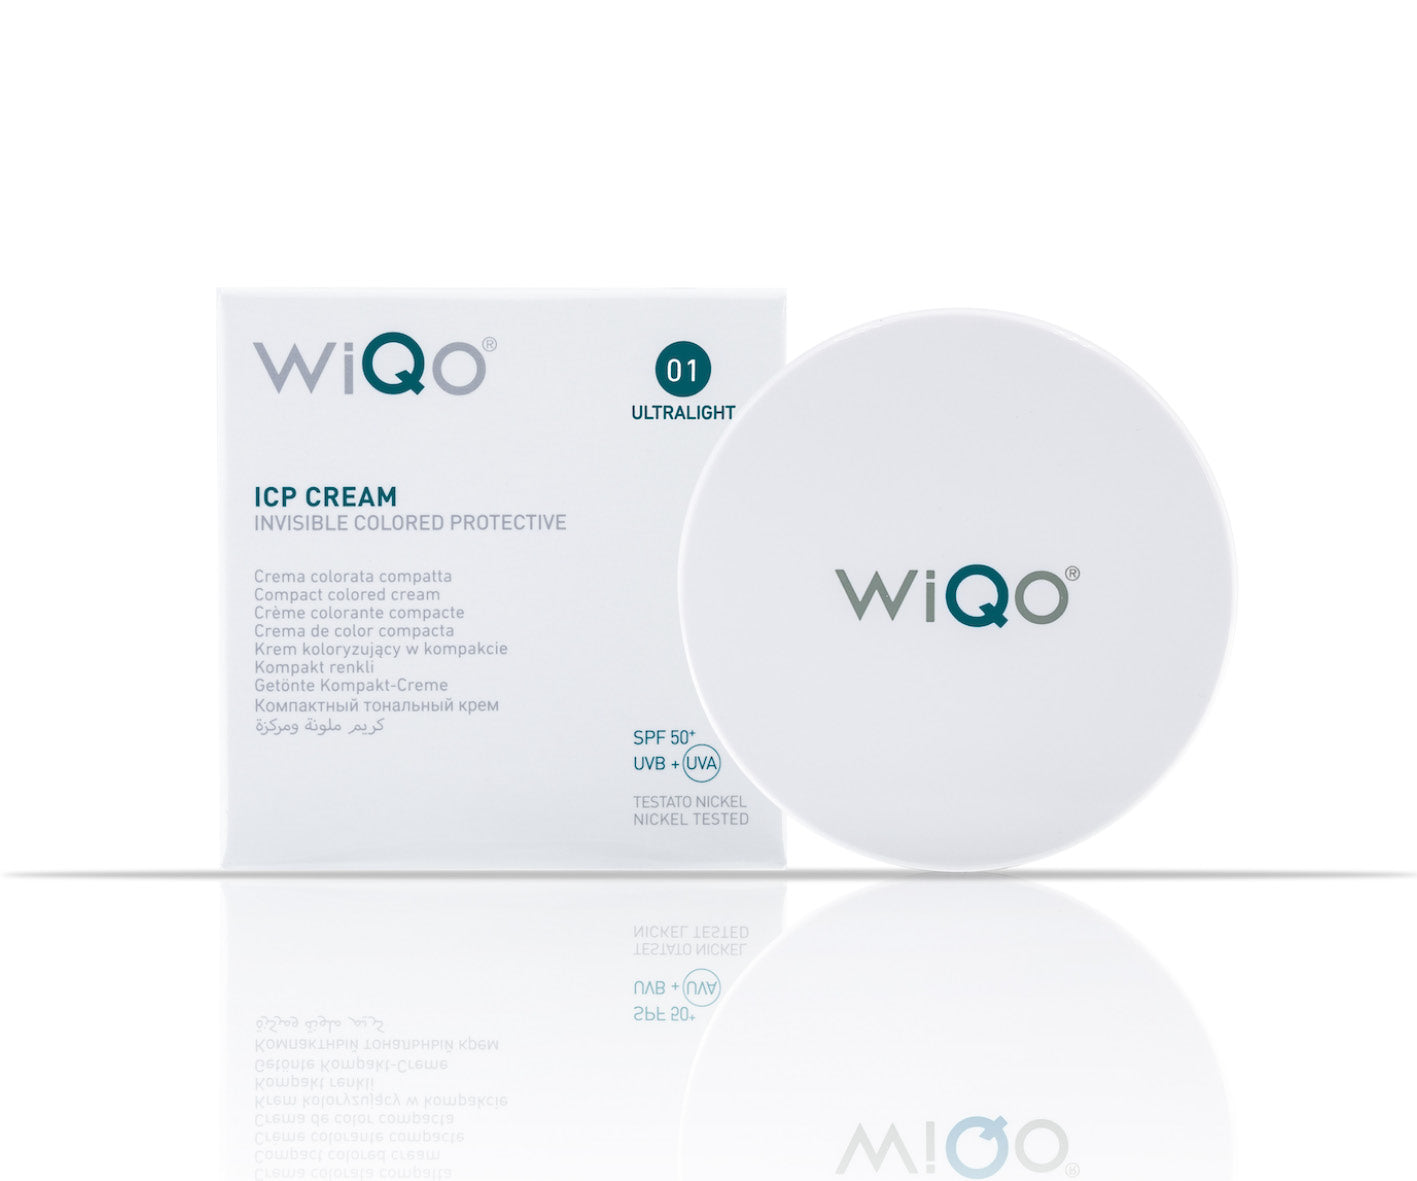 ICP WiQo - ultralight – WiQo Italia